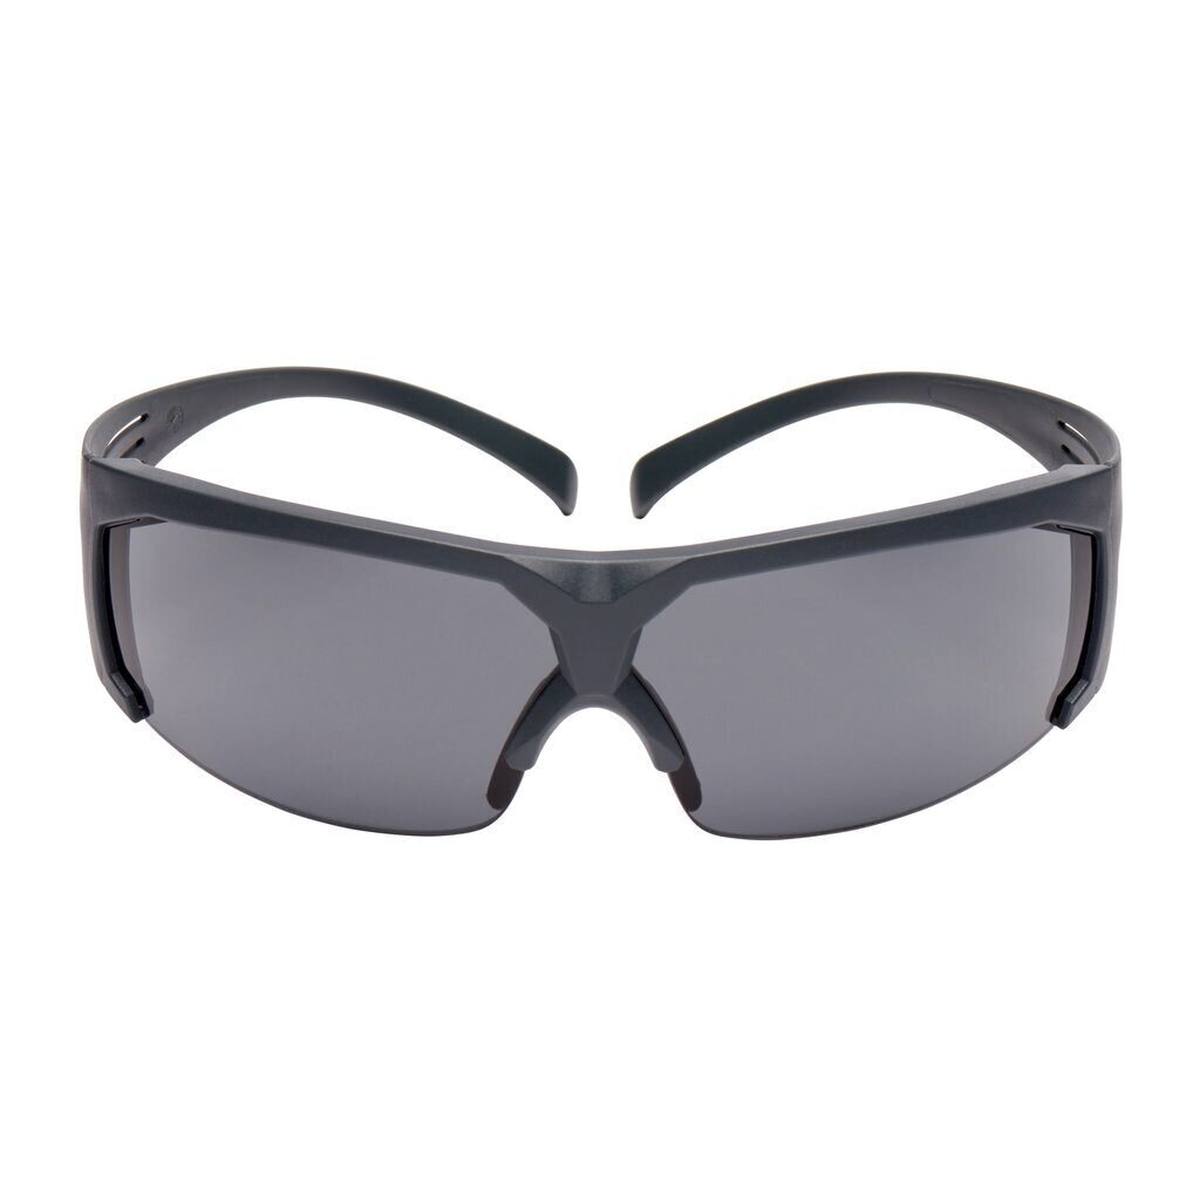 3M SecureFit 600 Schutzbrille, graue Bügel, Scotchgard Anti-Fog-/Antikratz-Beschichtung (K&N), graue Scheibe, SF602SGAF-EU